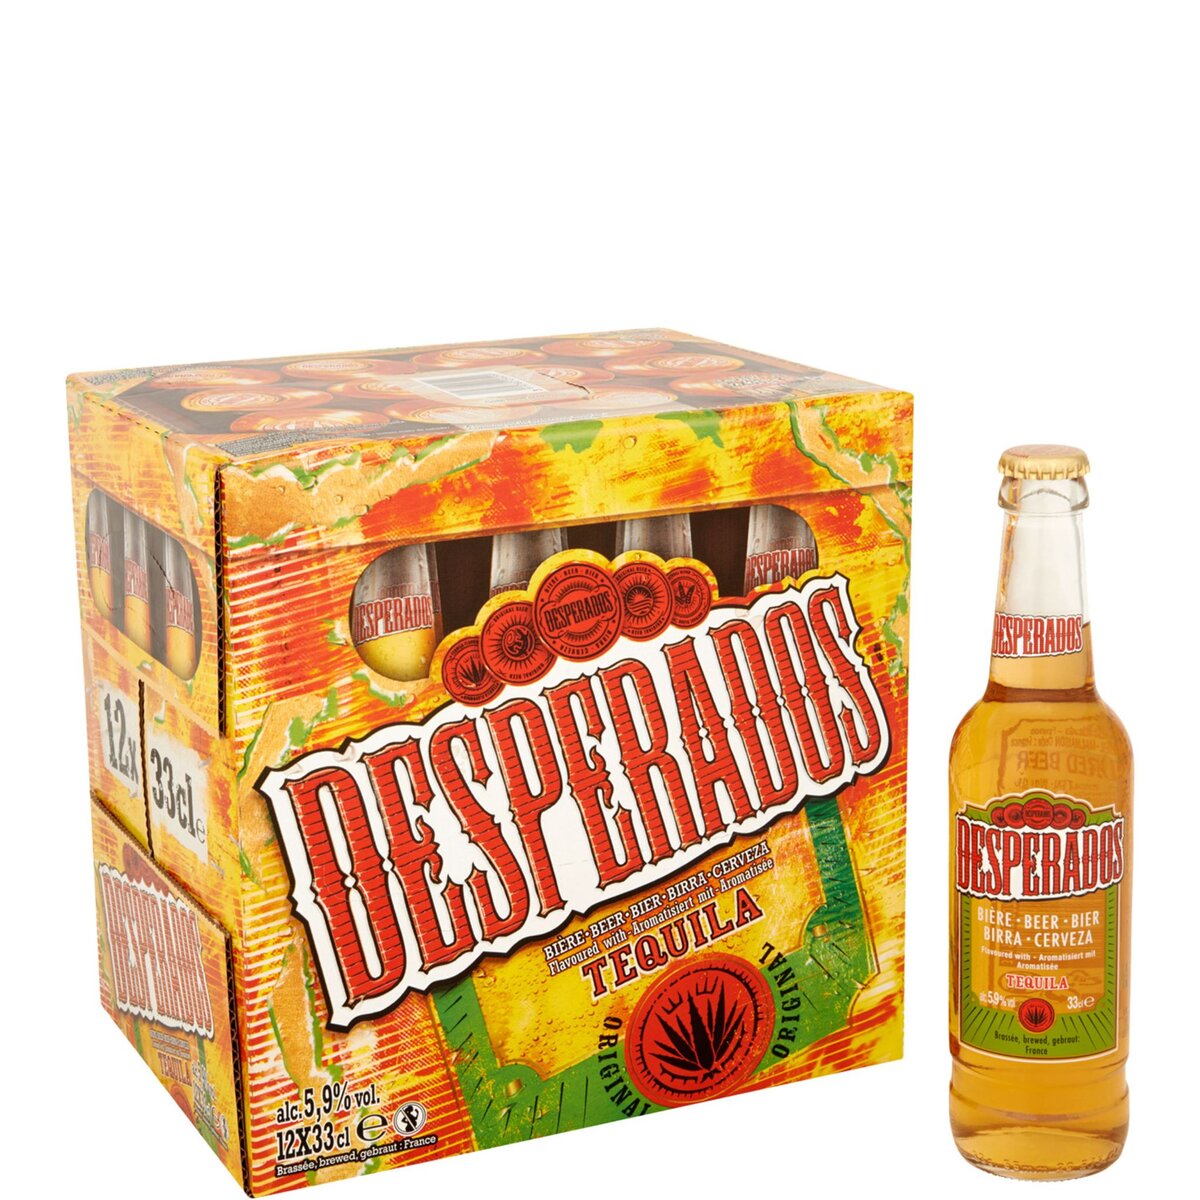 DESPERADOS Desperados bière aromatisée 5.9° - 12x33cl